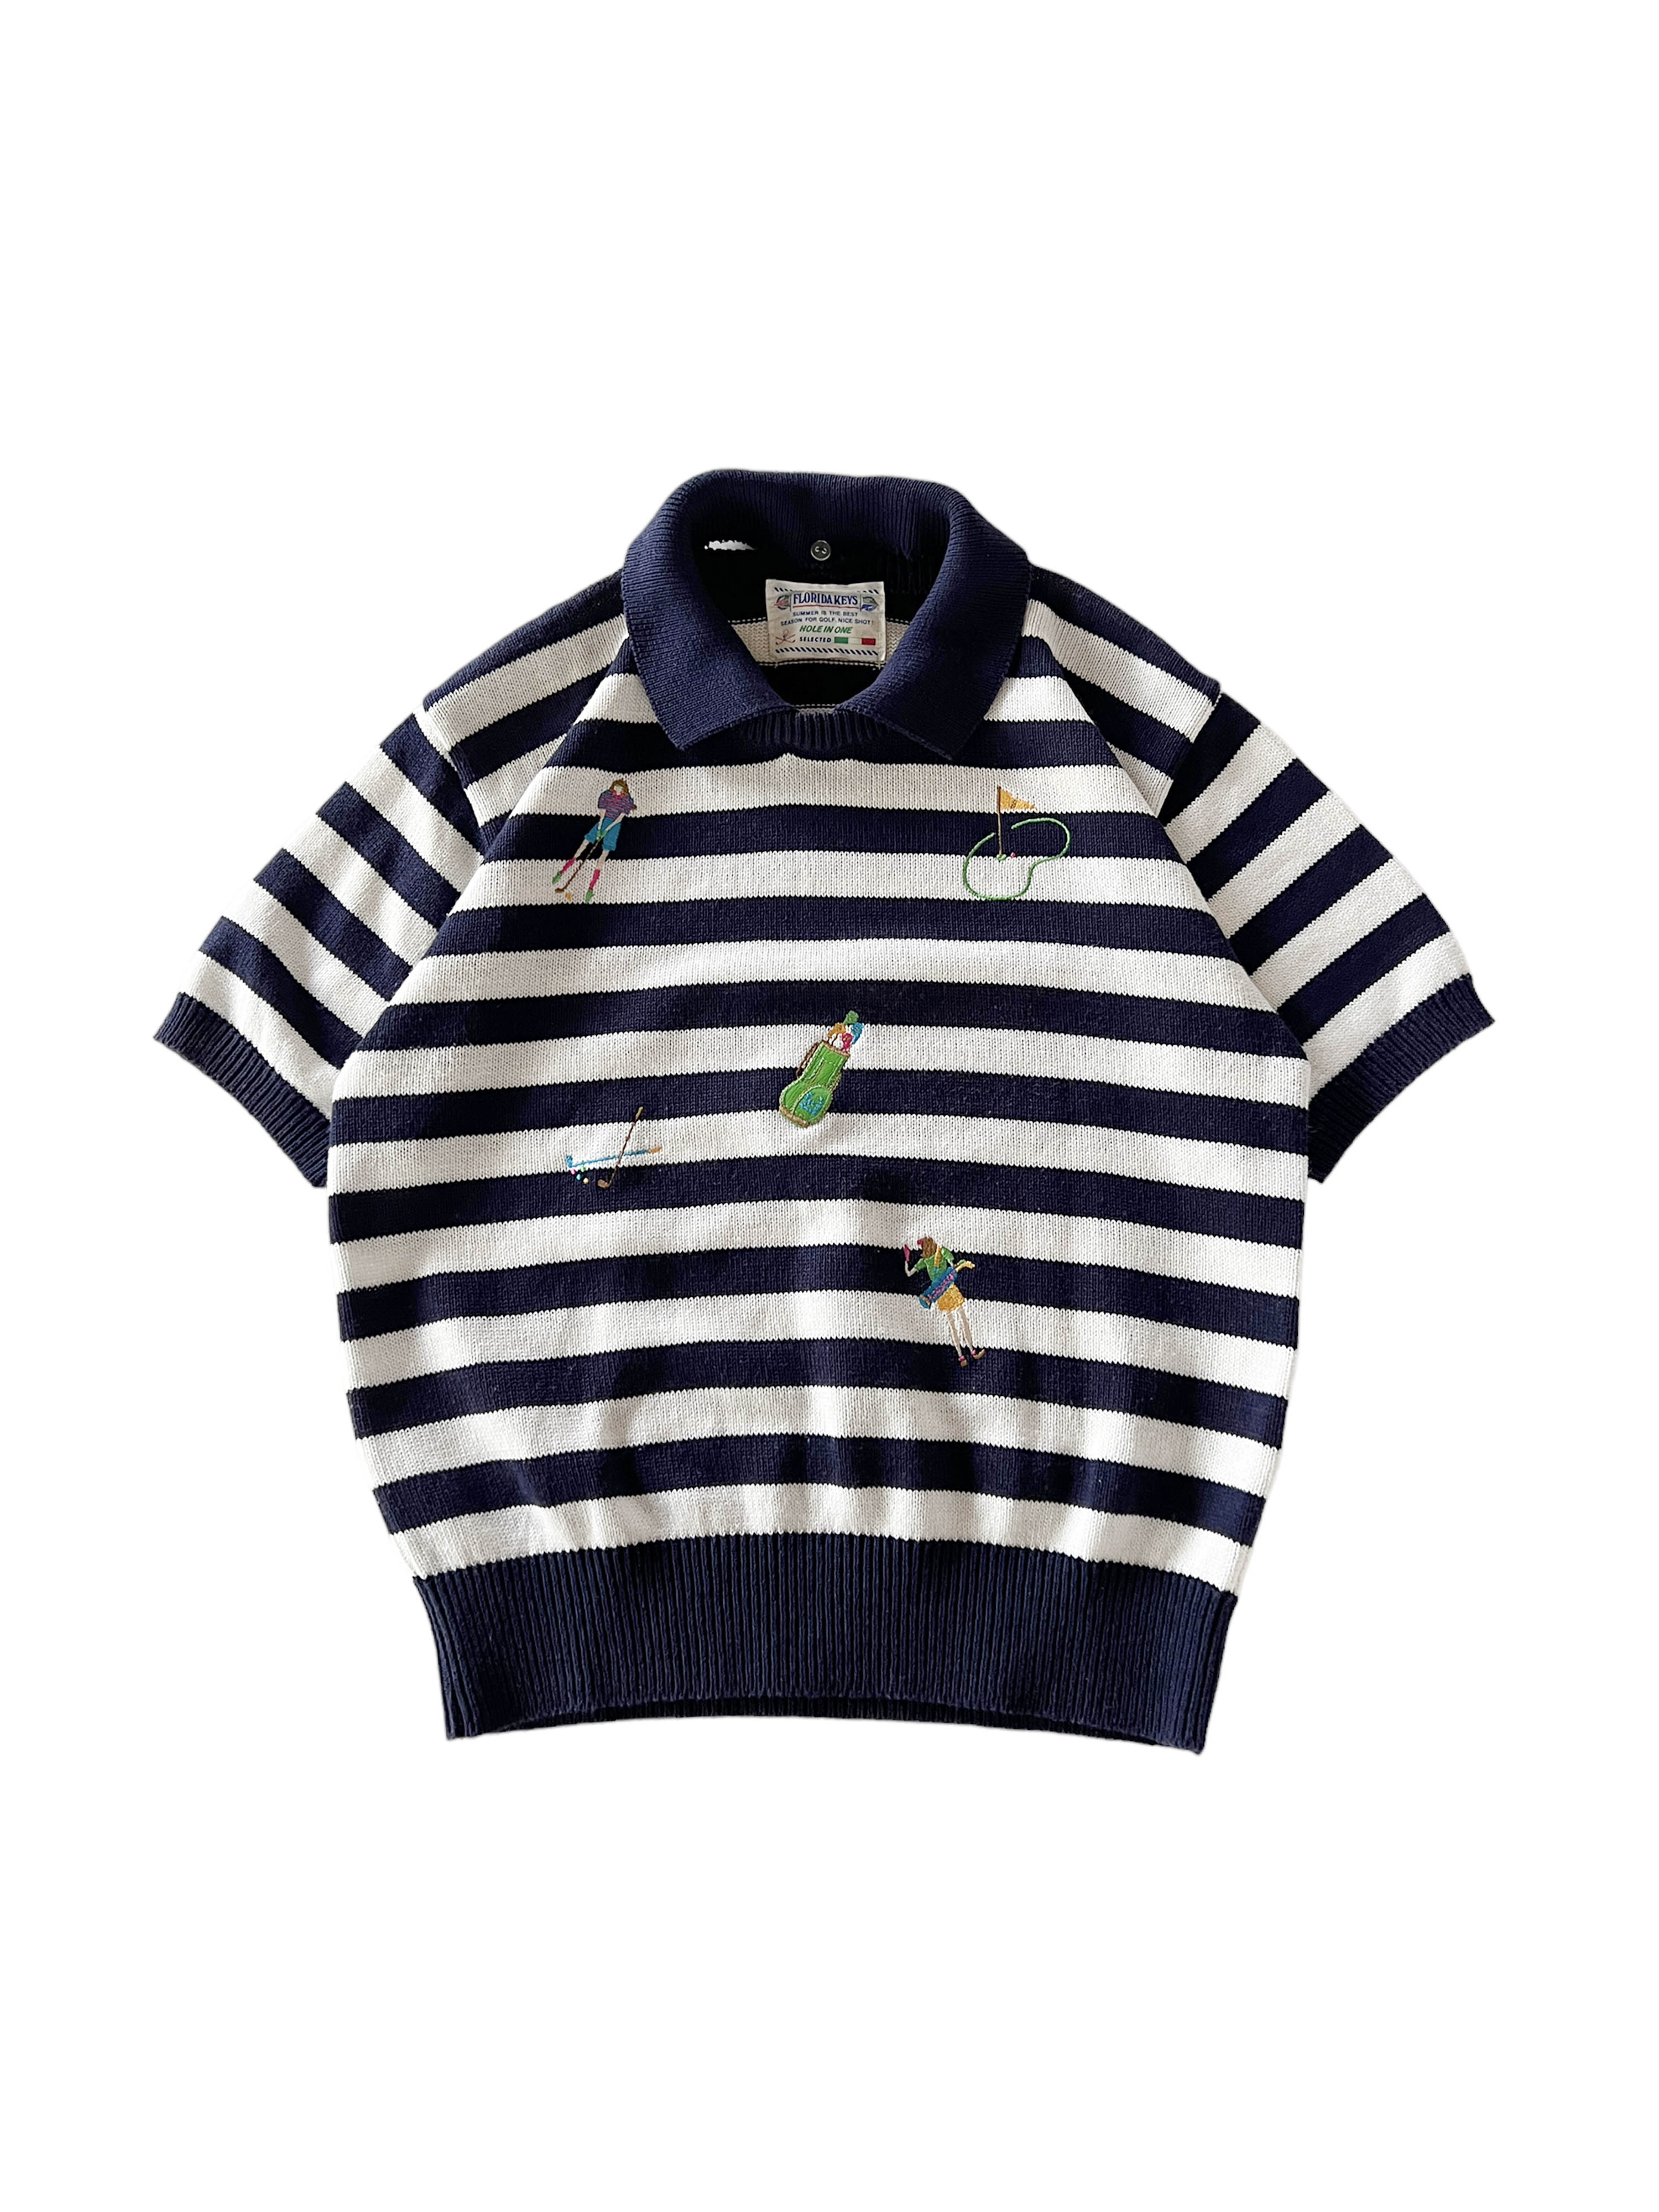 FLORIDA KEYS vintage stripe golf knit top